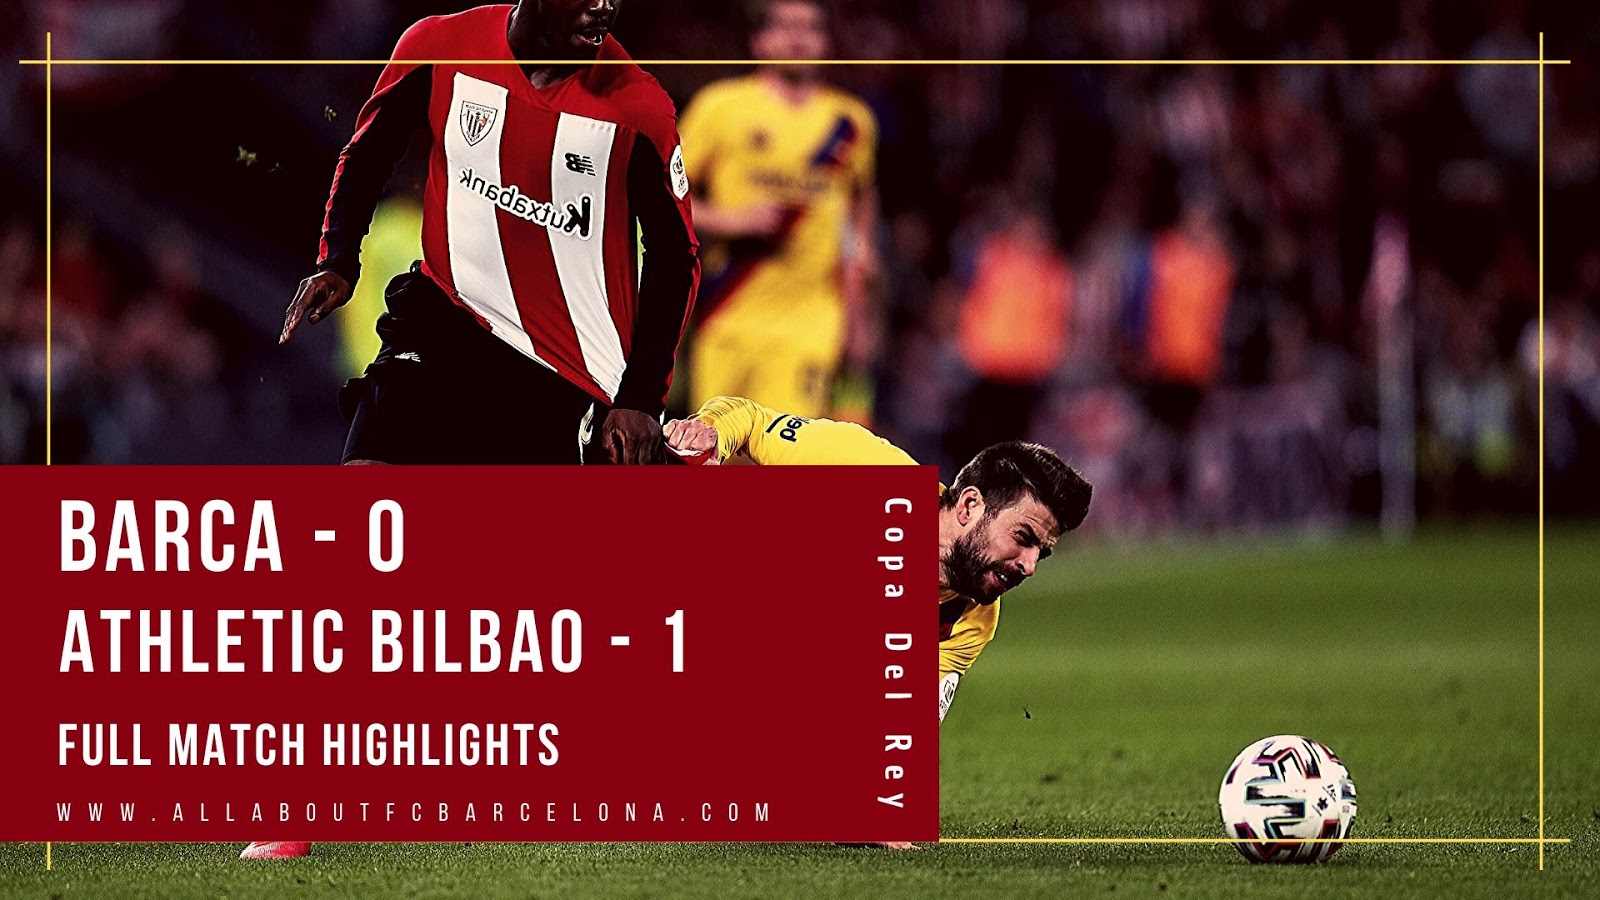 FC Barcelona vs Athletic Bilbao Highlights Video | Barca - 0, - 1